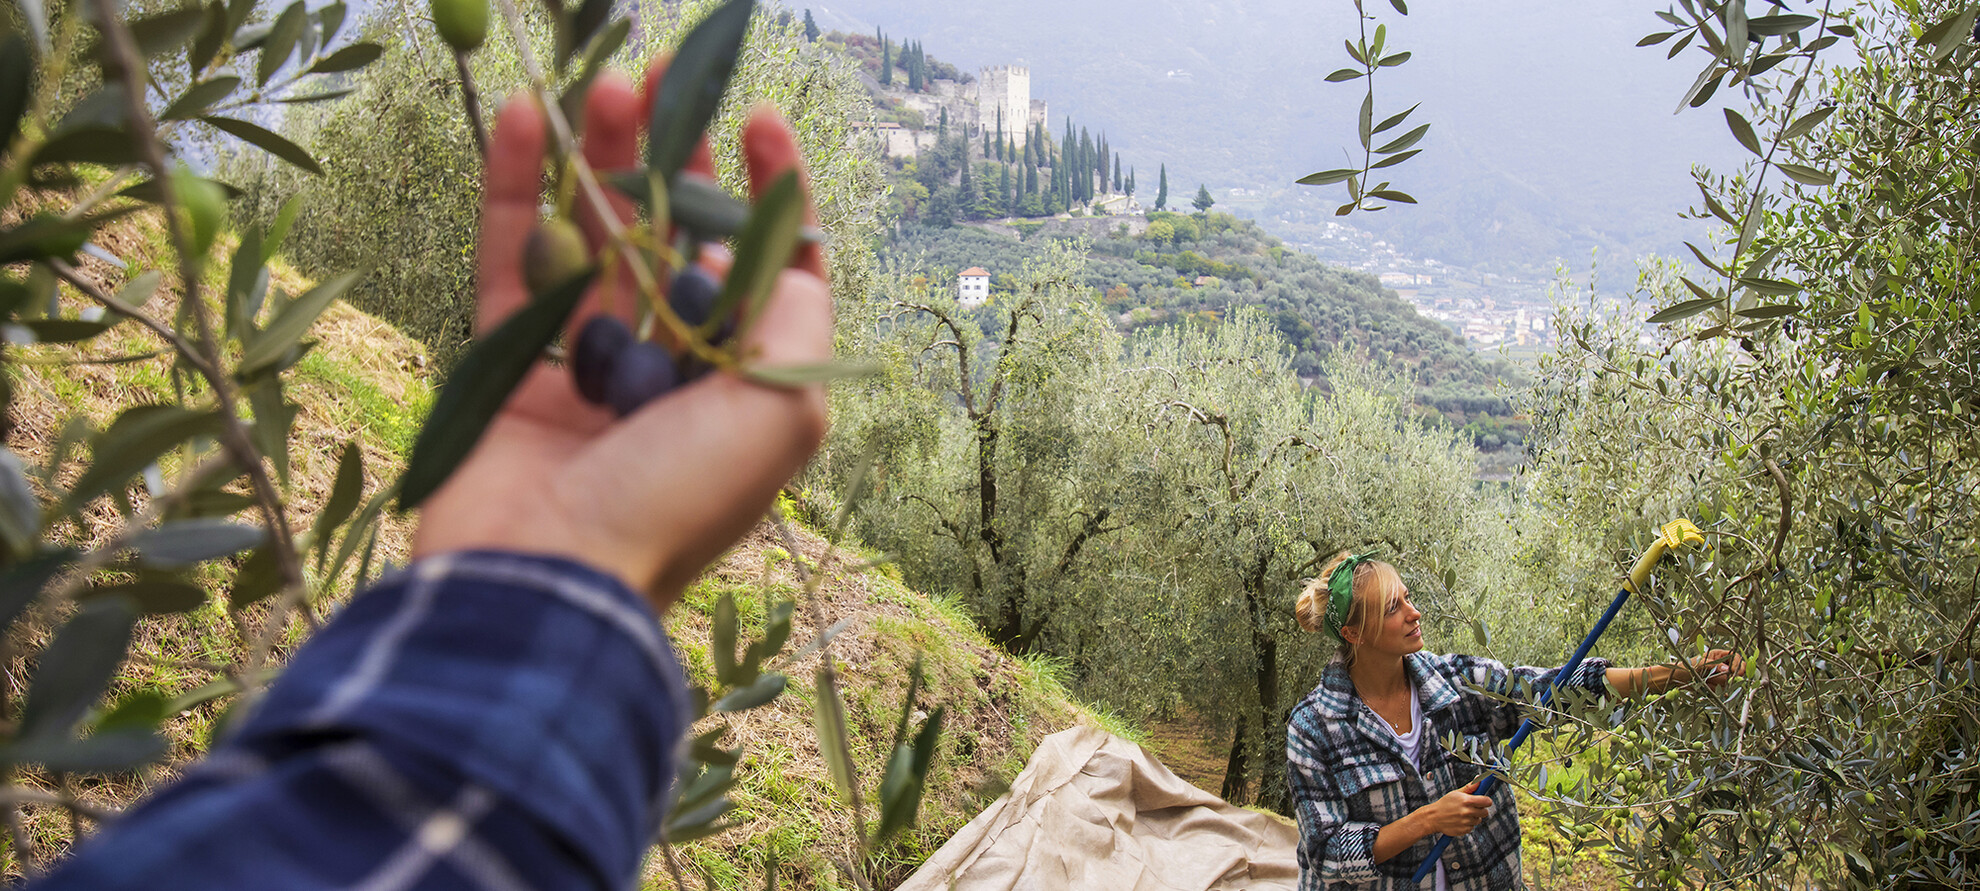 Raccolta olive | © Archivio Trentino Mktg